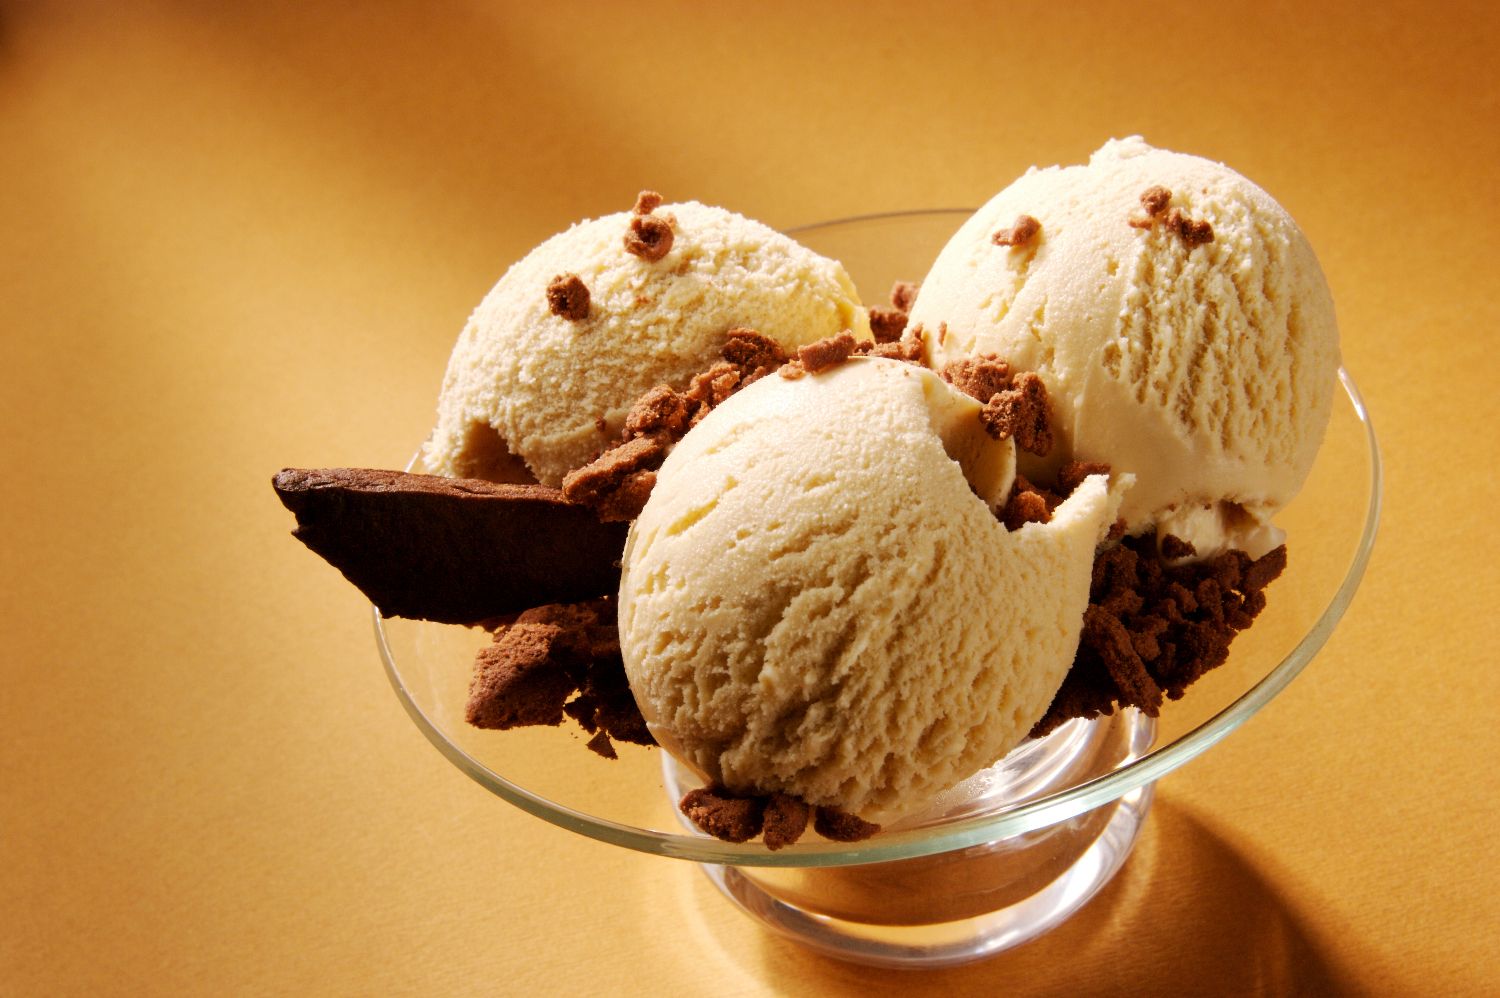 Chocolate-Ice-Cream-ice-cream-34732673-1500-998.jpg